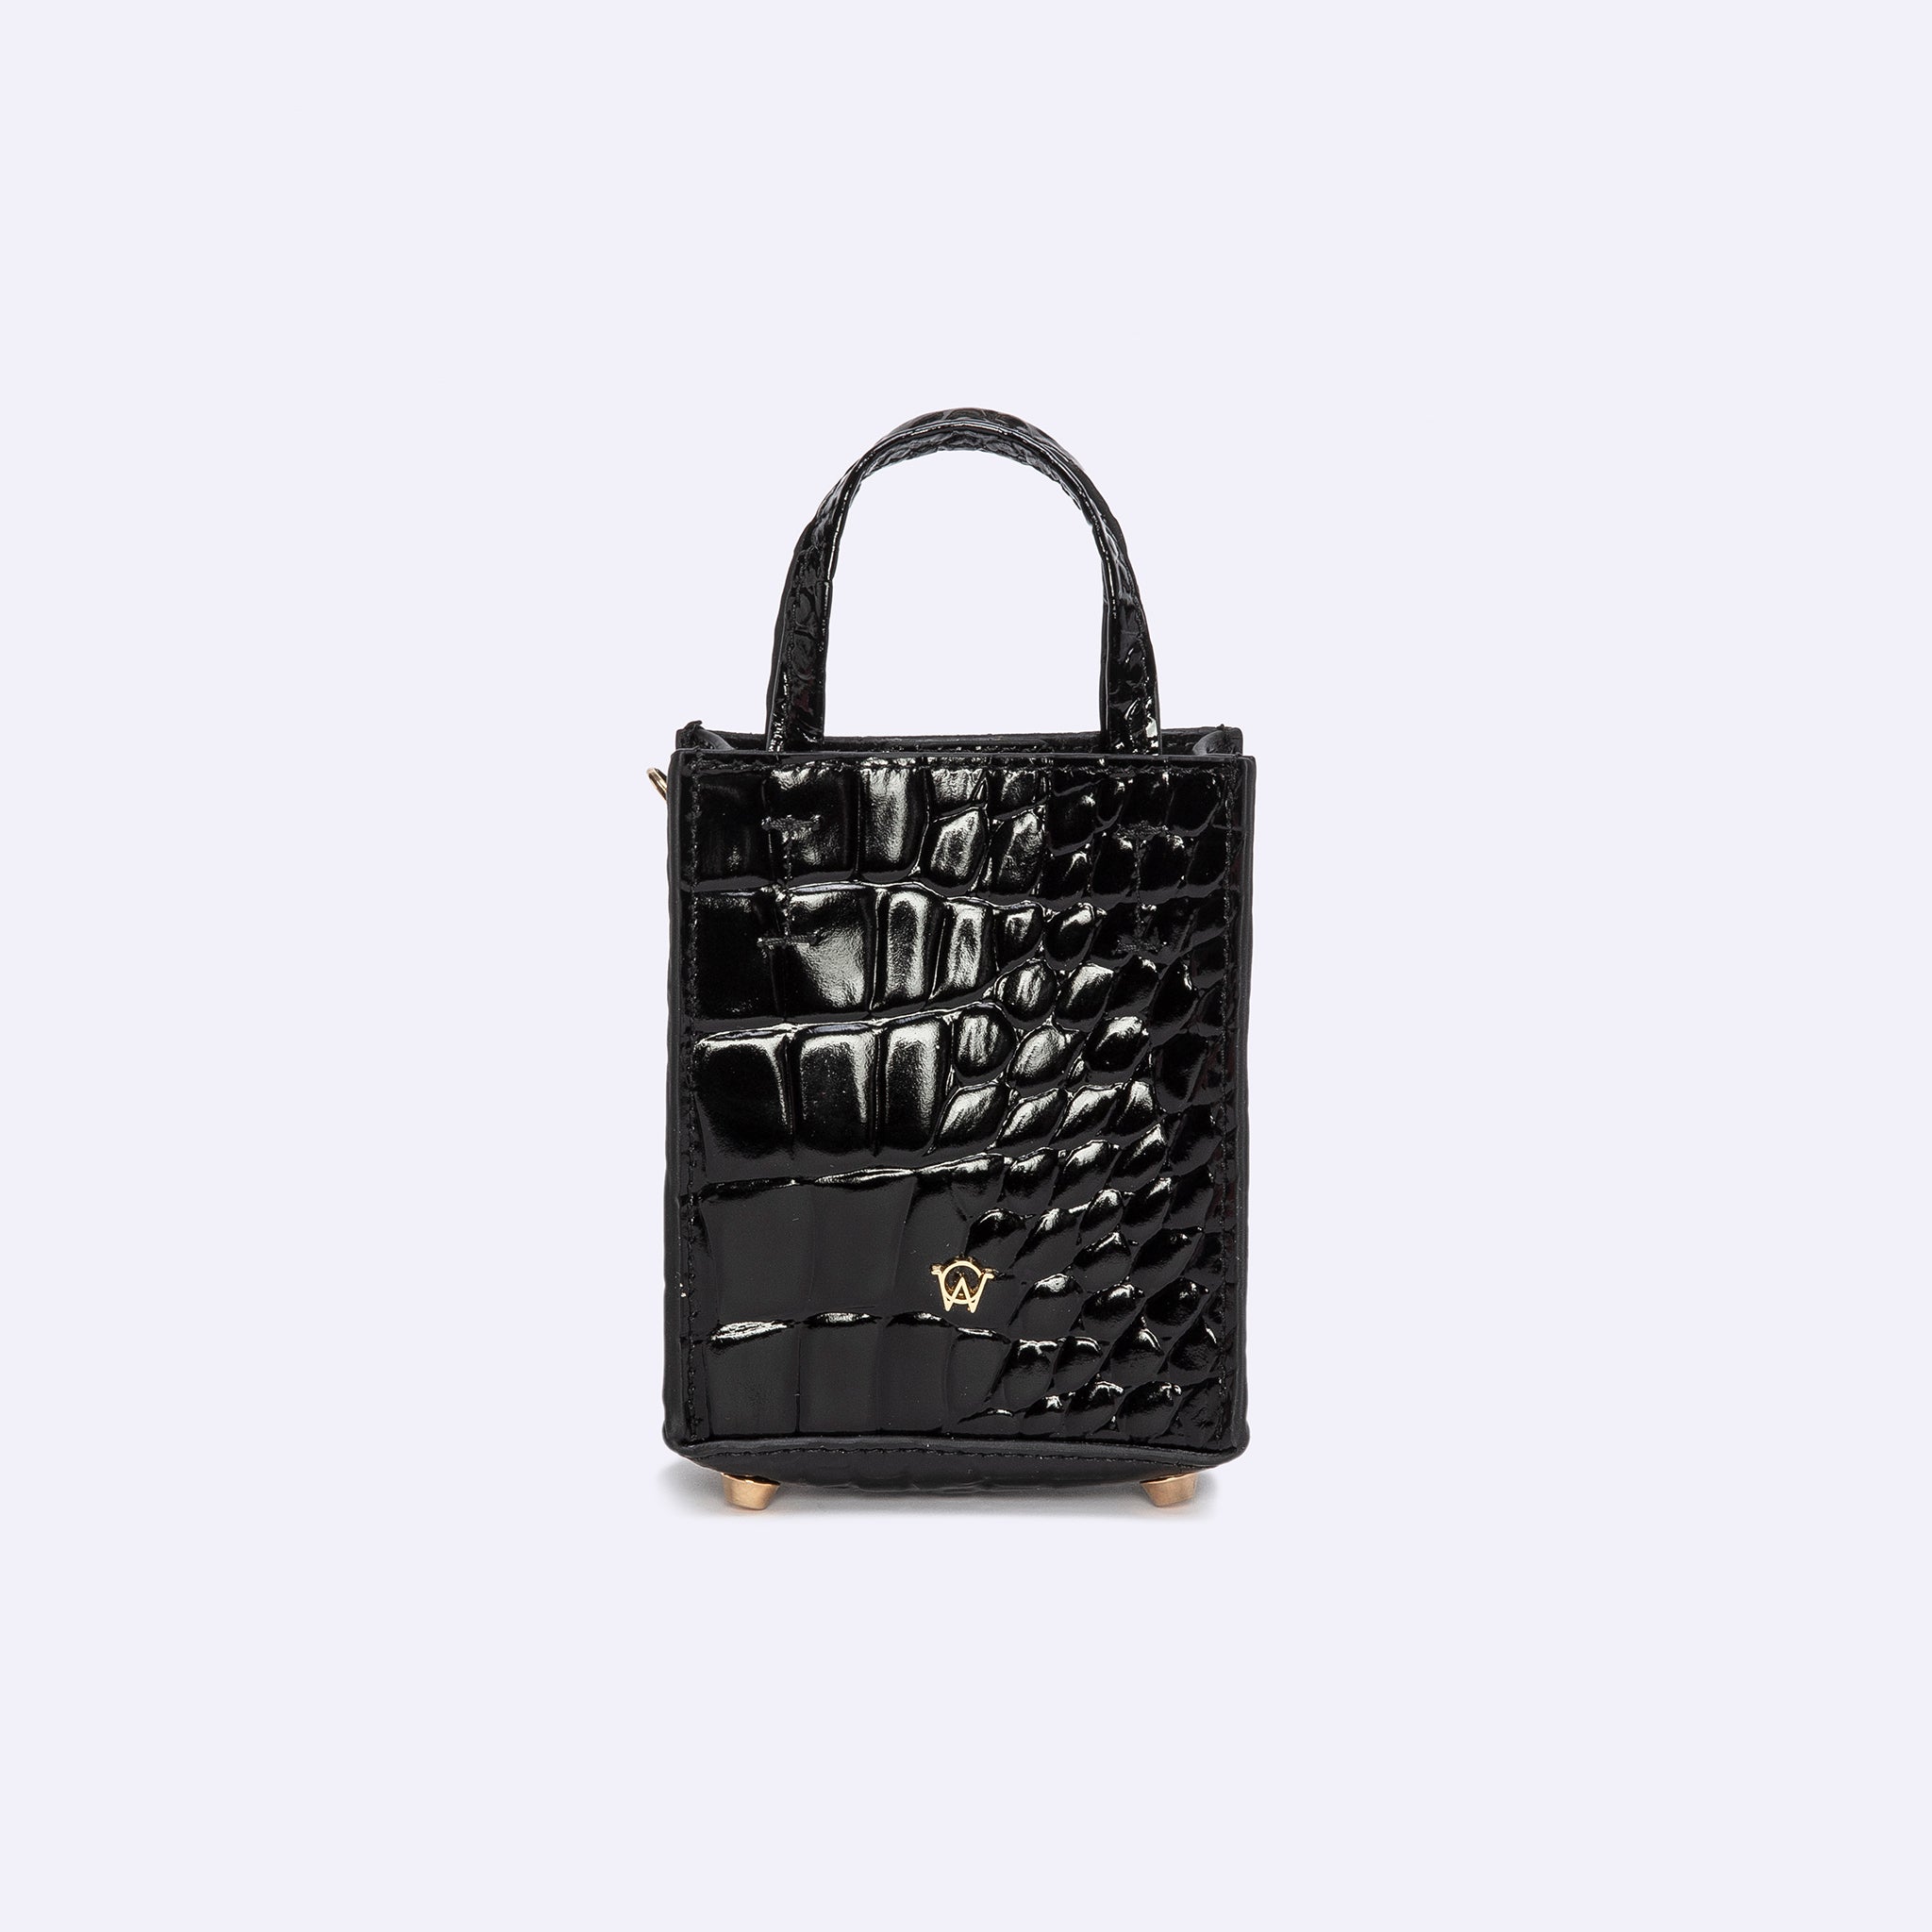 LOLA-PINK CROCLOLA-PINK Croc Handbag